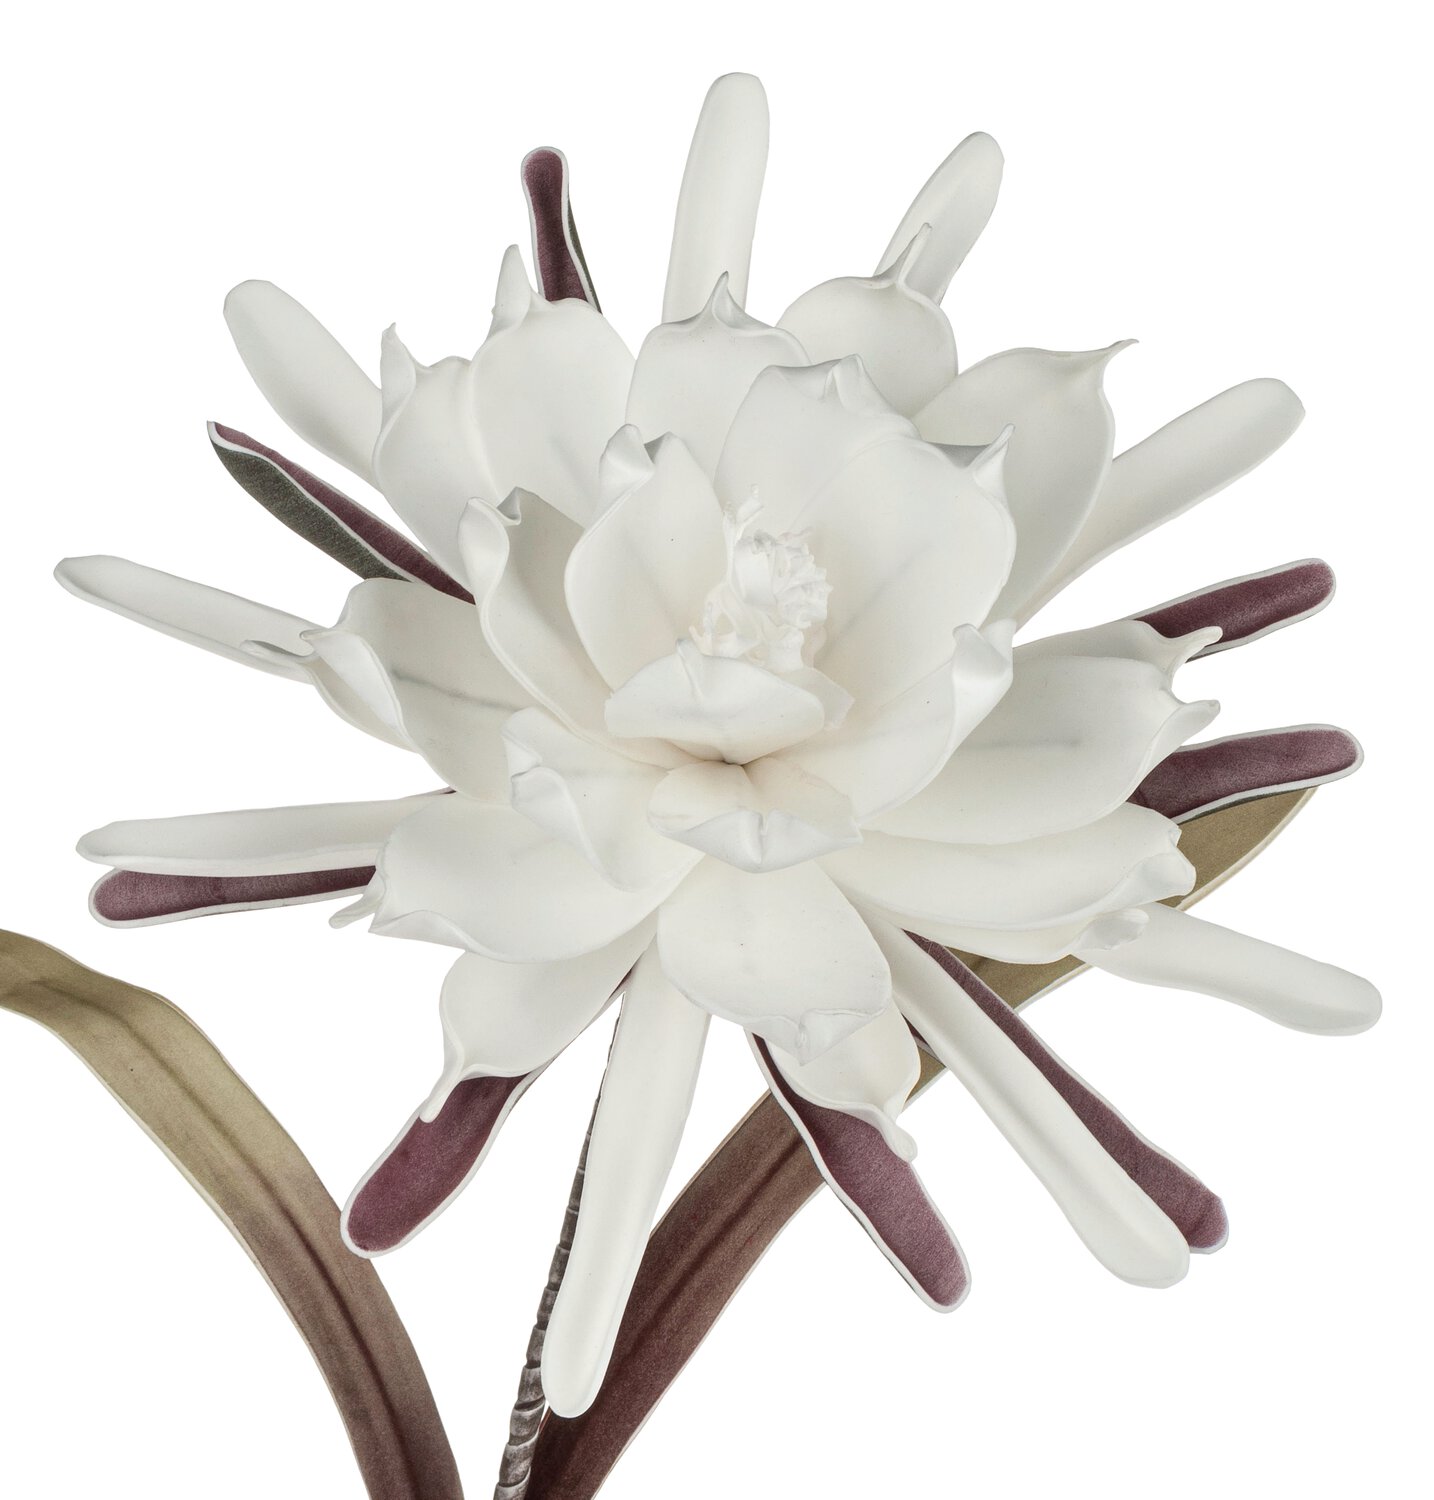 Deko Soft flower 'Kaktusblüte', 90 cm, pur weiß